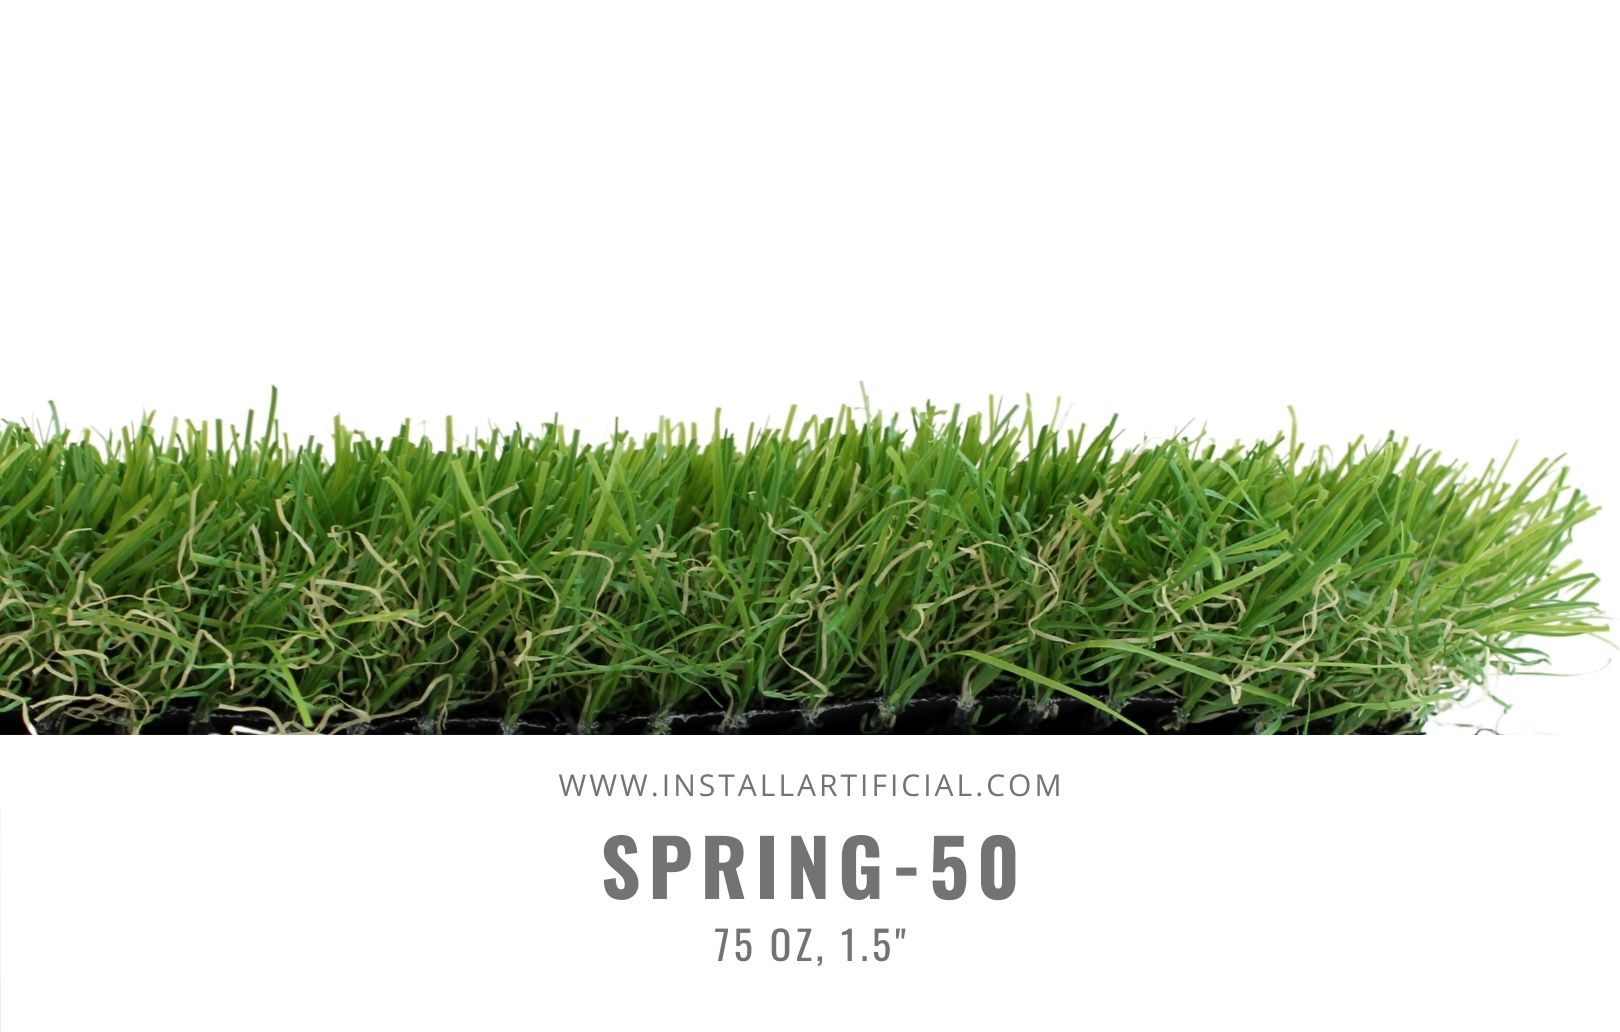 Spring-50, Global Syn Turf, Side